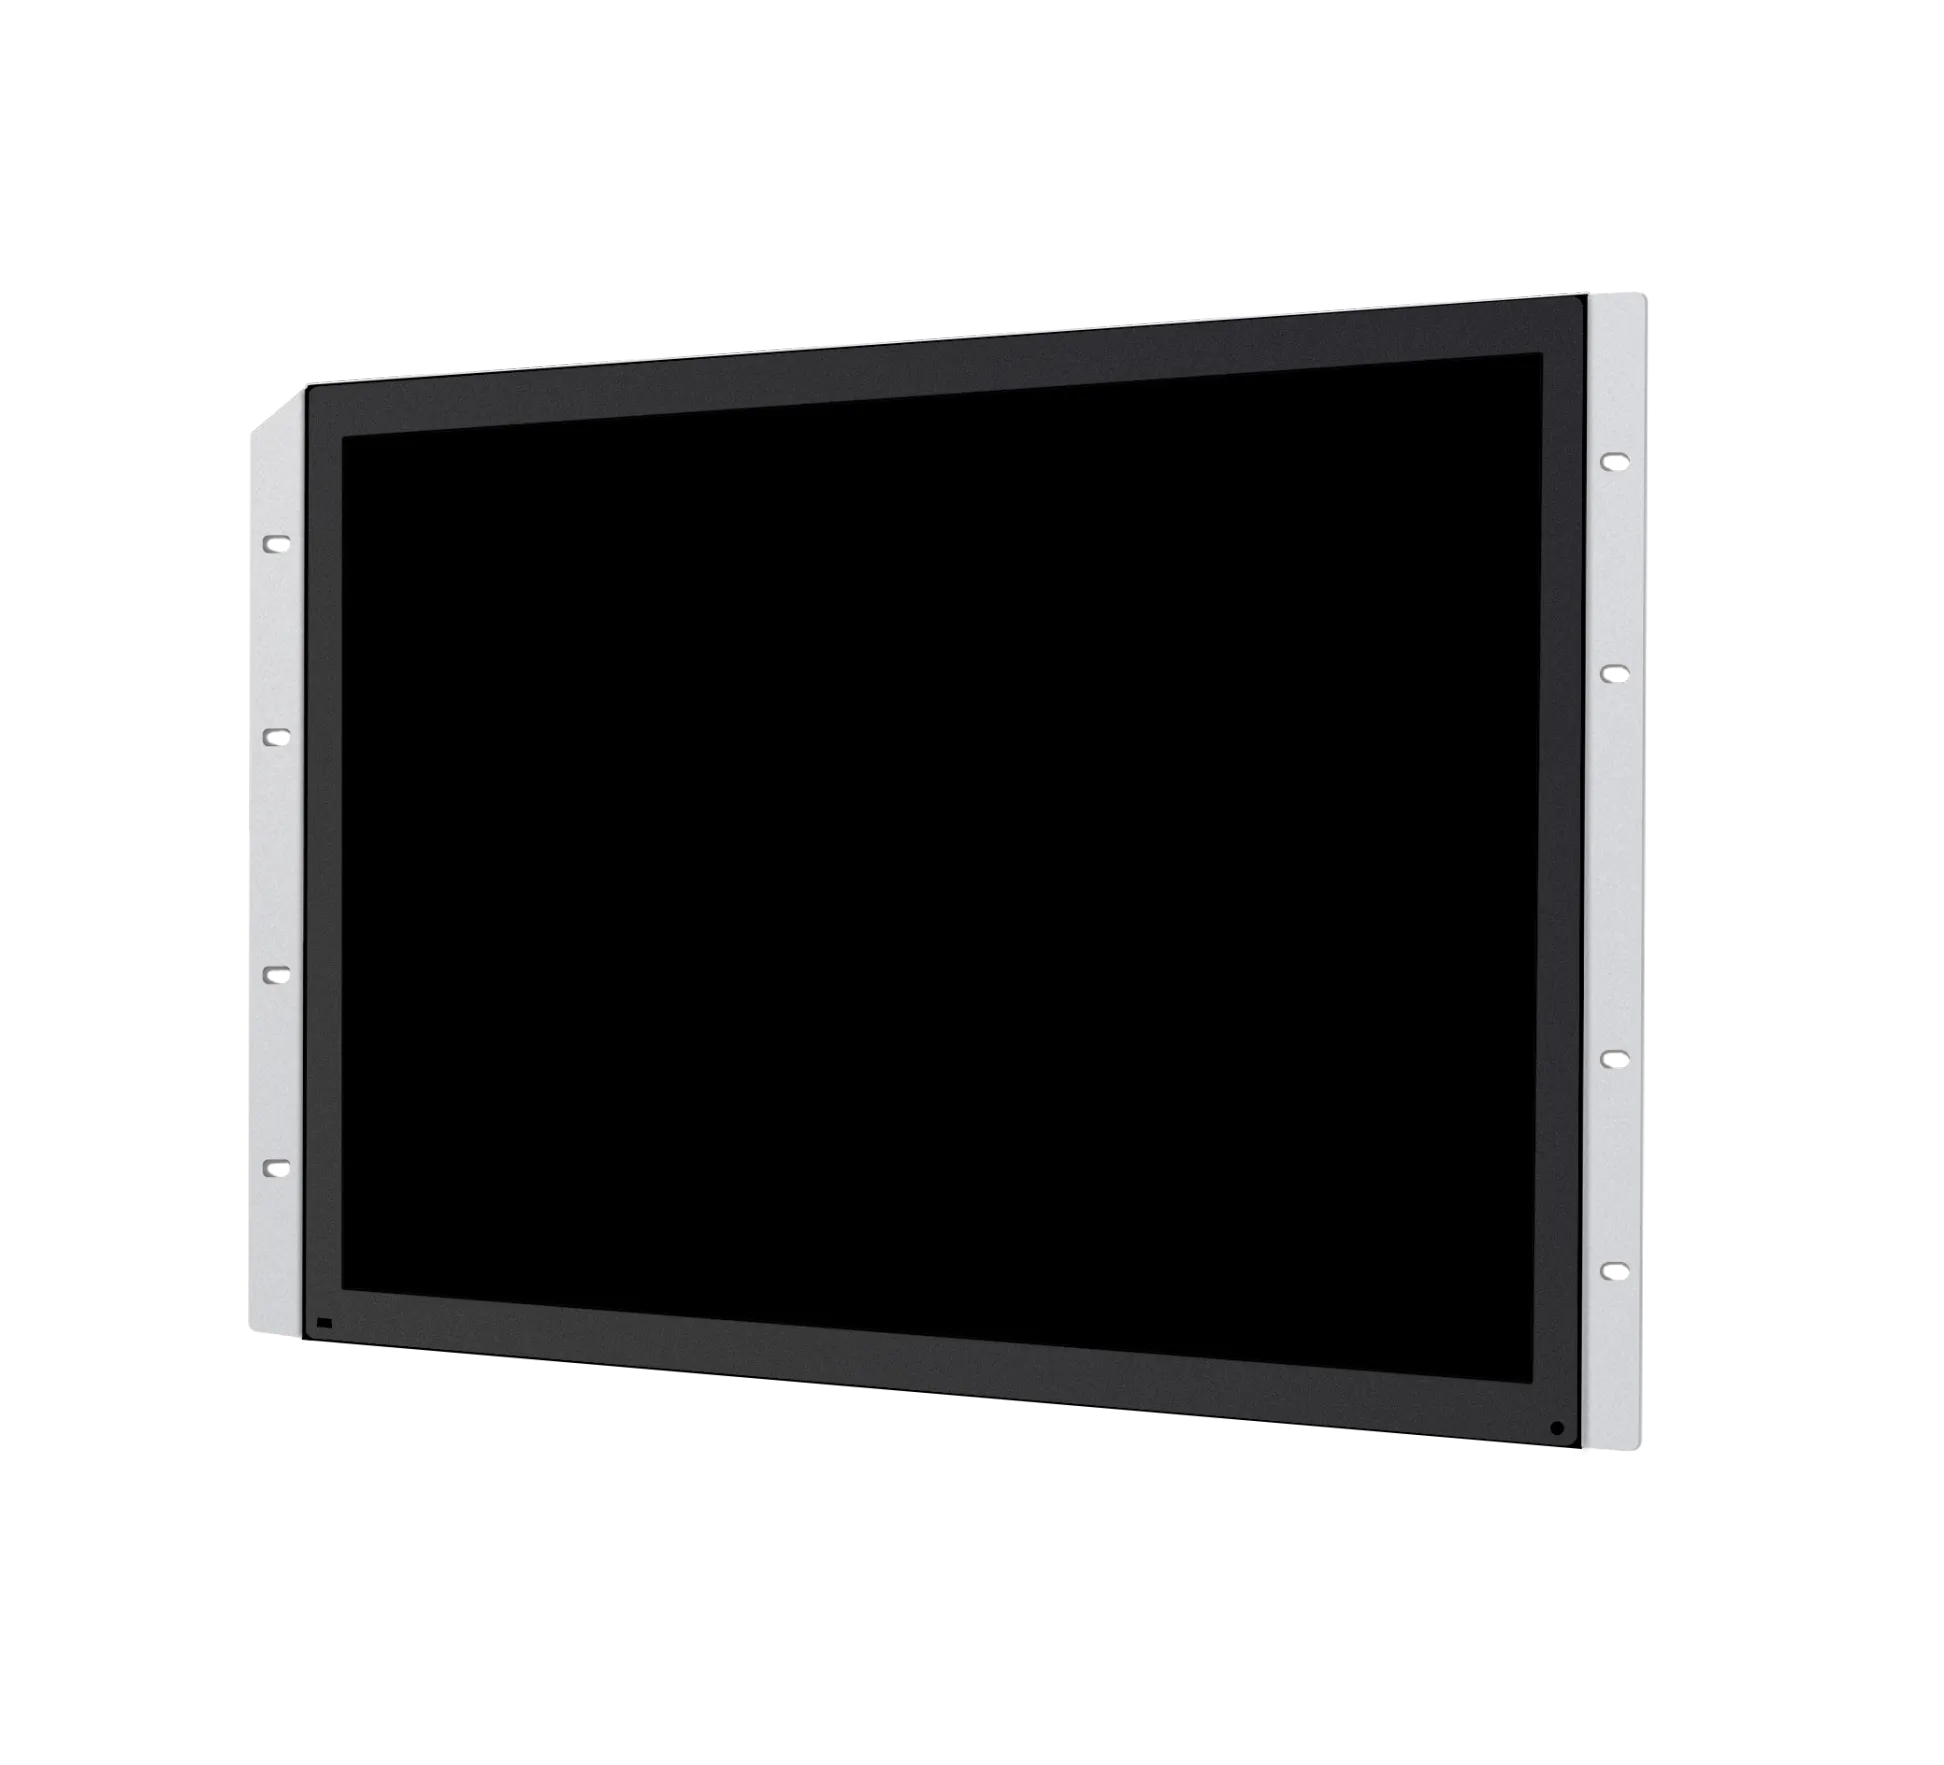 ULM26 Unico Phoenix Monitor Series 4:3 Arcade CRT Replacement LCD Monitor